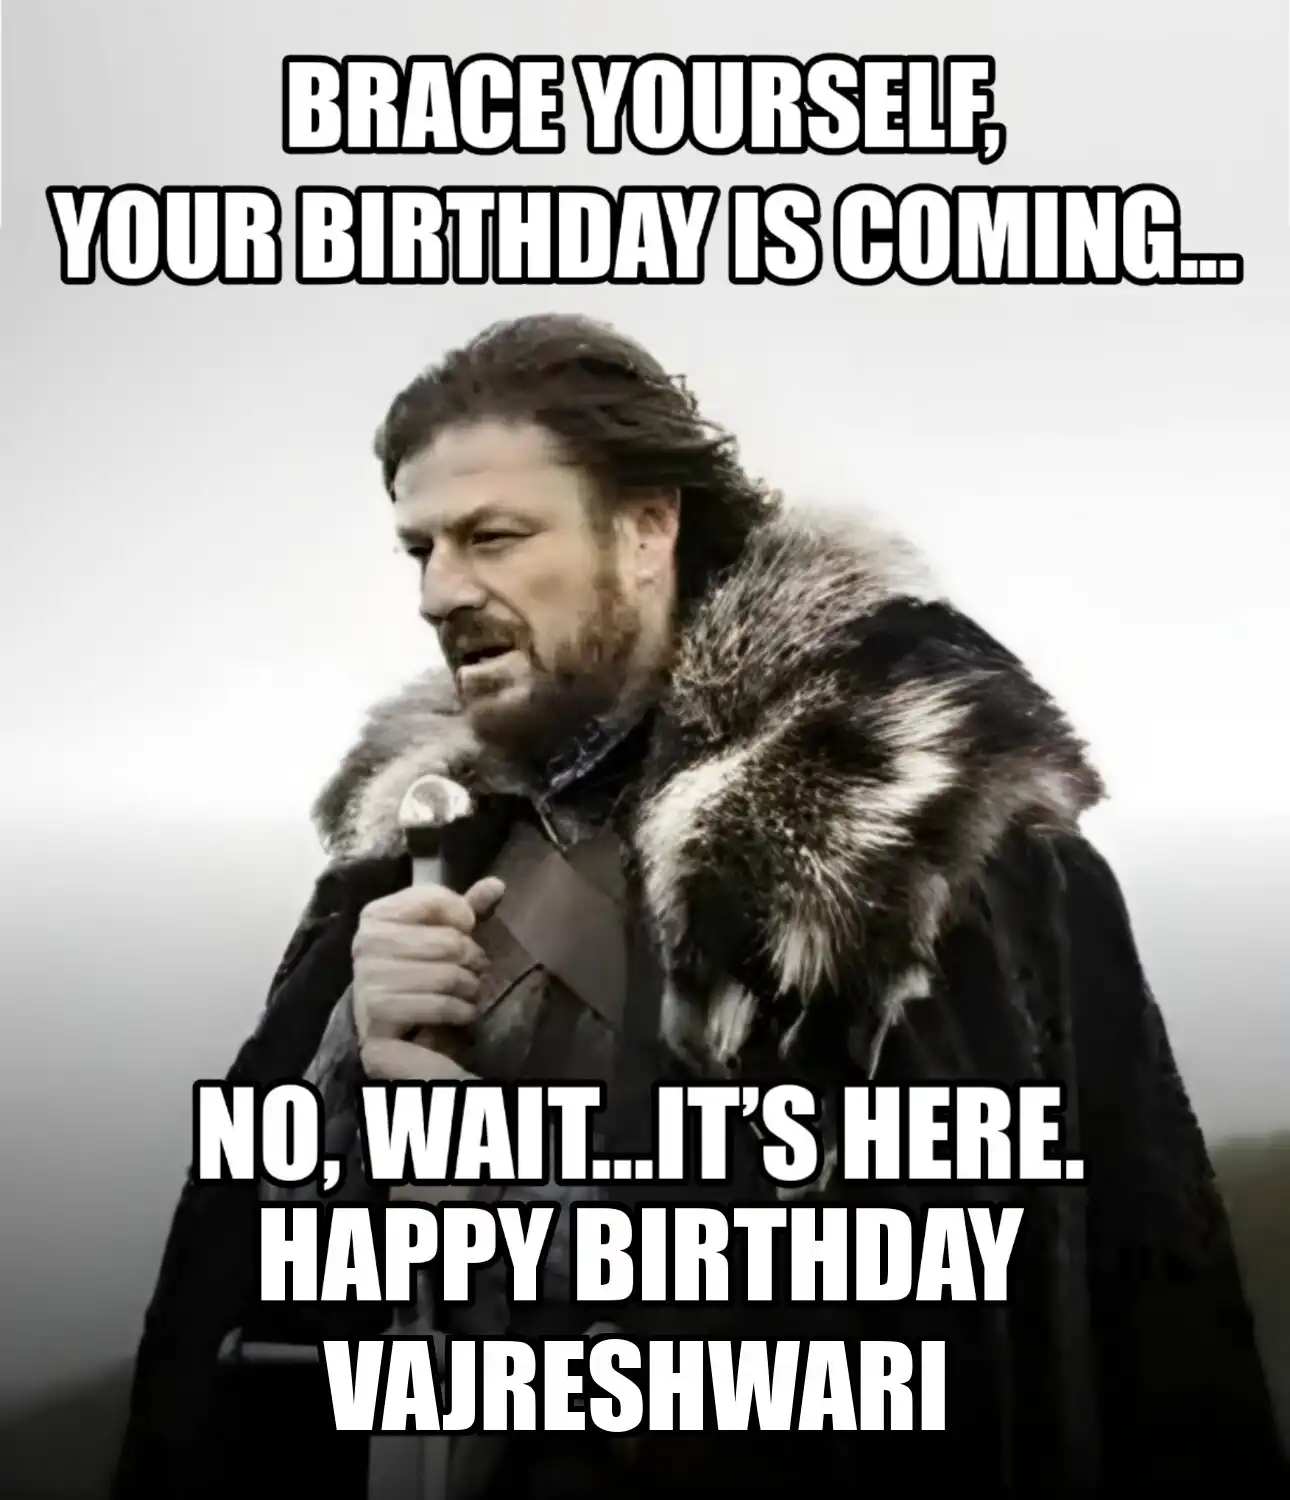 Happy Birthday Vajreshwari Brace Yourself Your Birthday Is Coming Meme